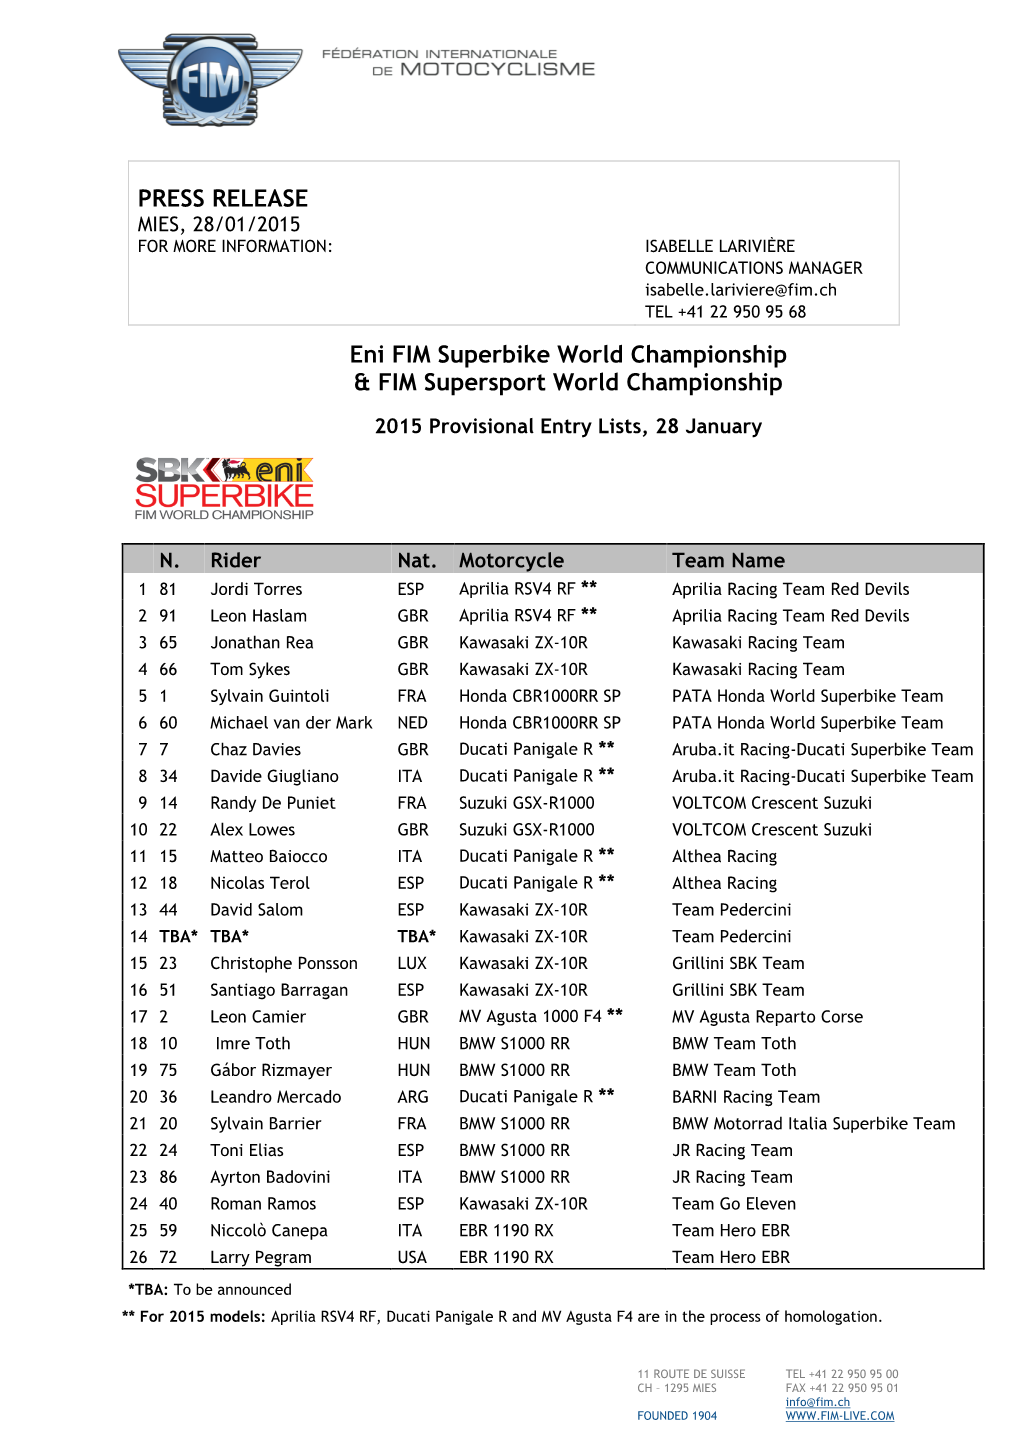 PRESS RELEASE Eni FIM Superbike World Championship & FIM